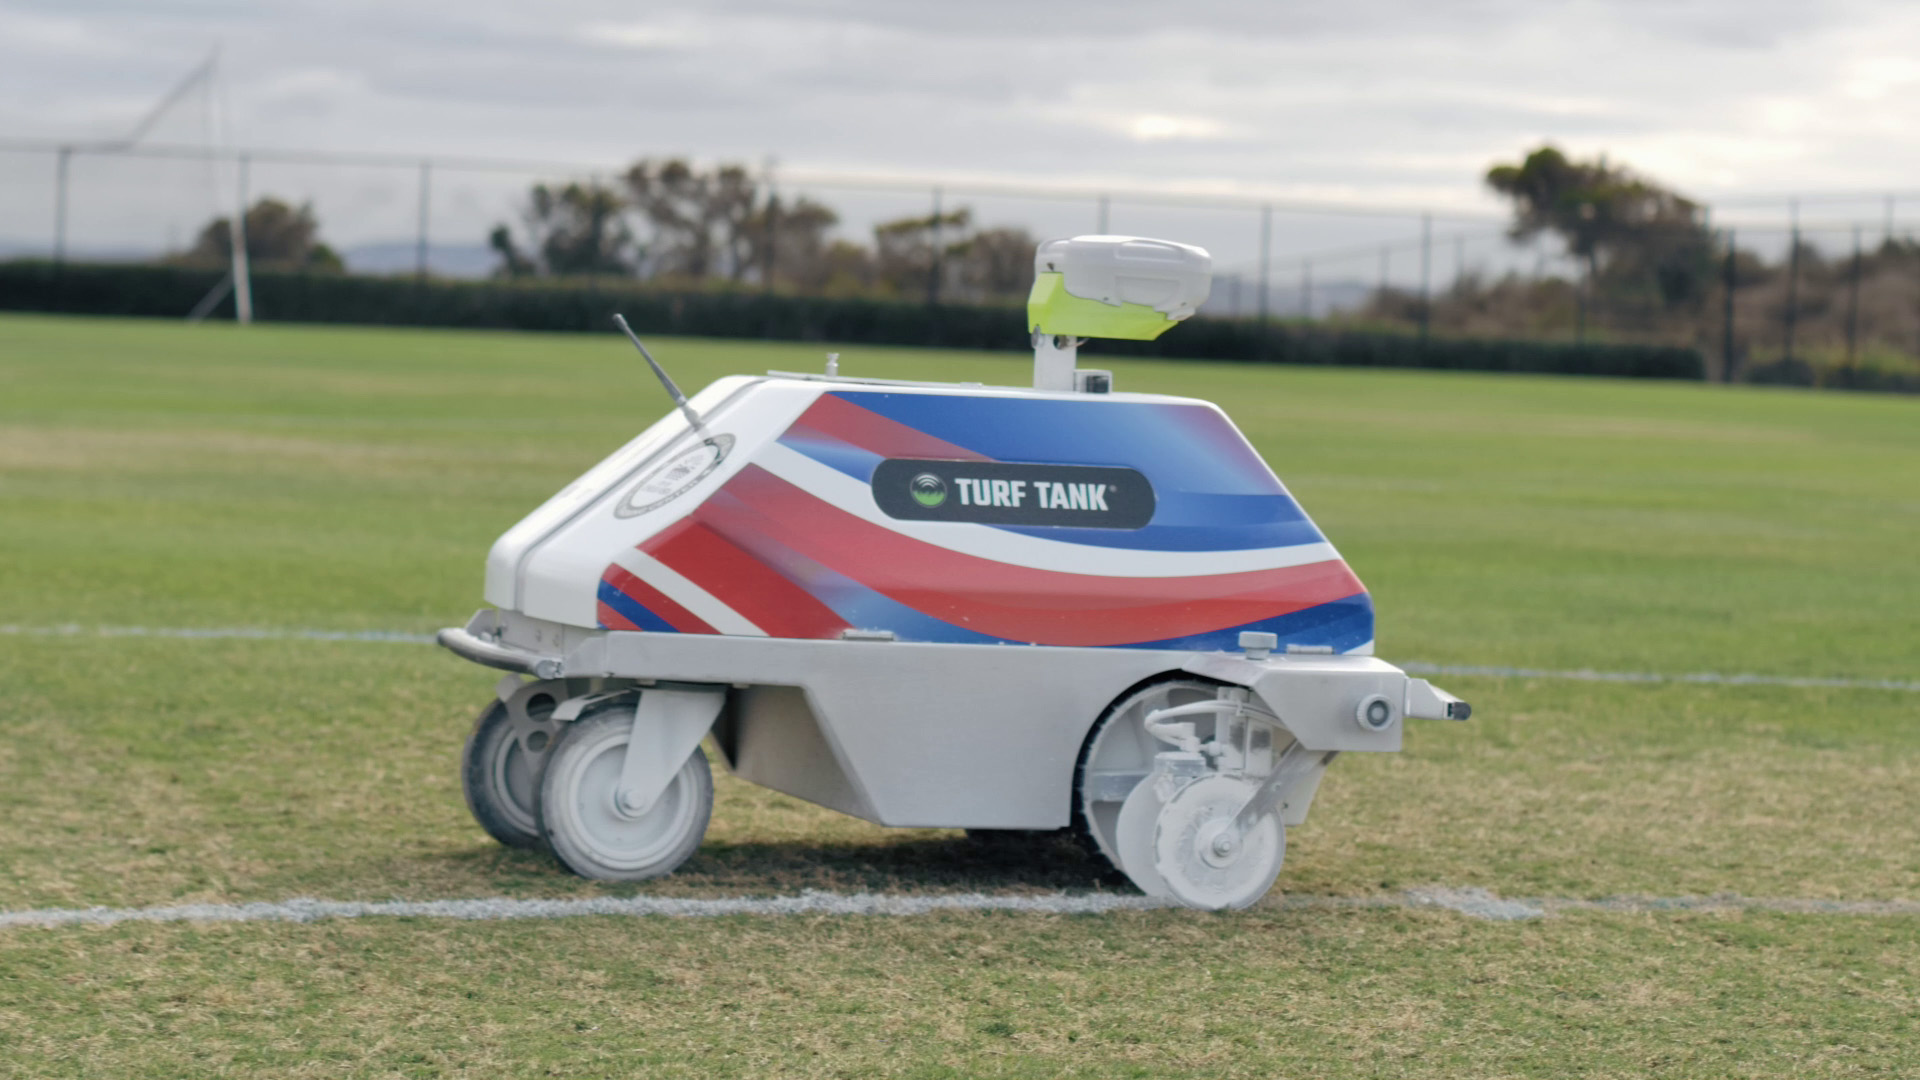 Chula vista's custom wrapped turf tank robot